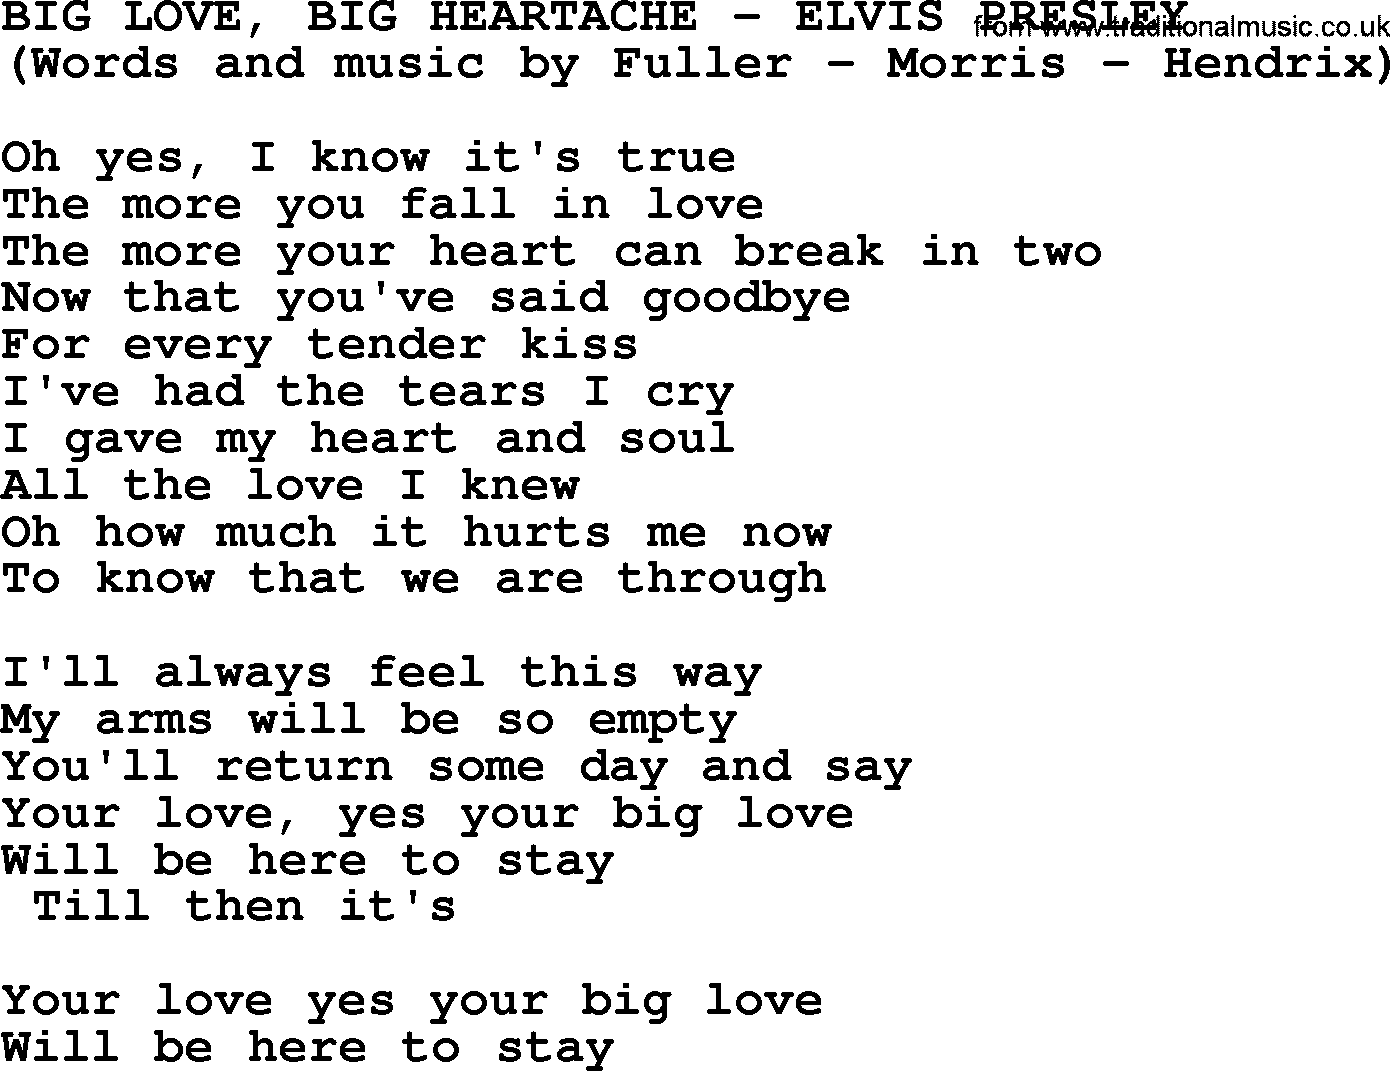 Elvis Presley song: Big Love, Big Heartache lyrics